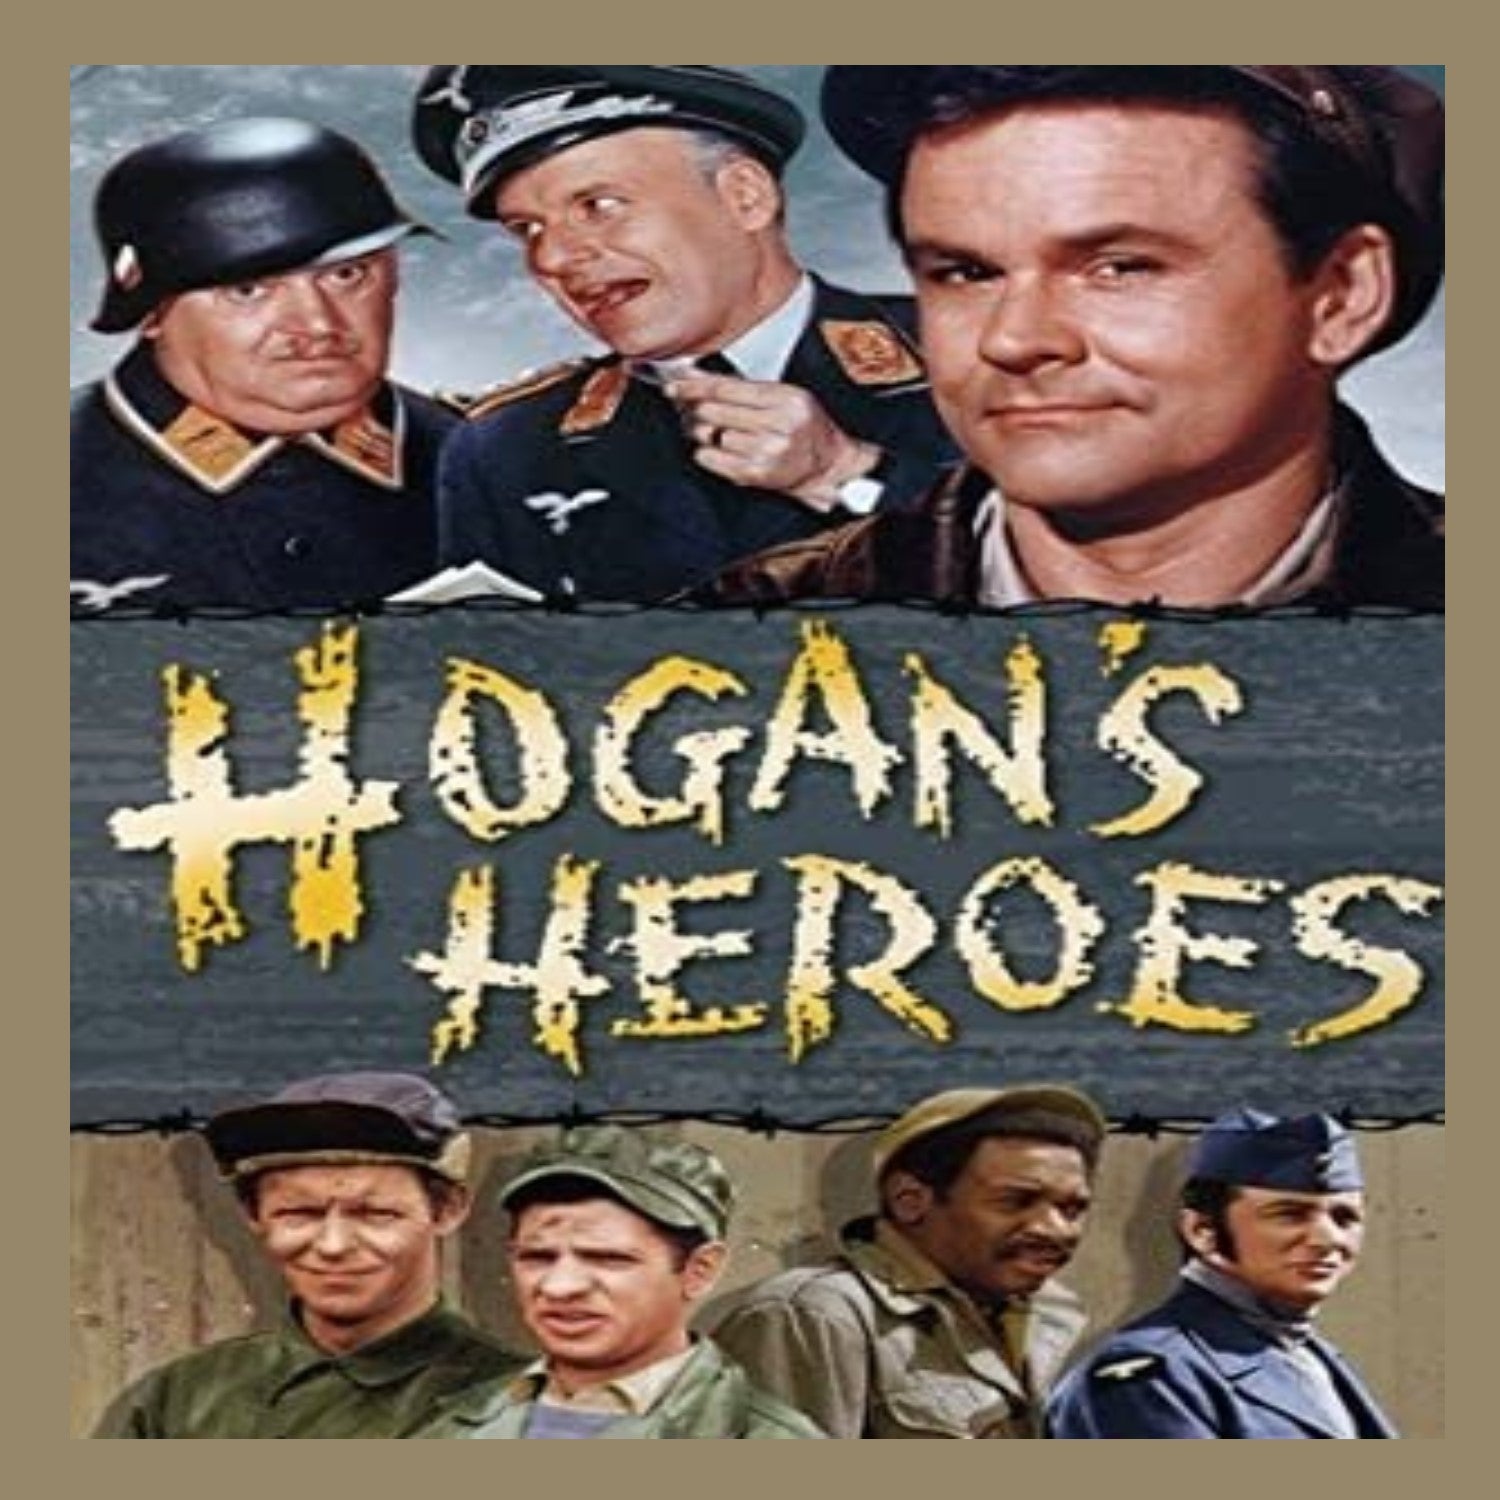 HOGAN’S HEROES - THE COMPLETE SERIES (CBS 1967-72) EXCELLENT RETAIL QUALITY!!! Bob Crane, Werner Klemperer, John Banner, Richard Dawson, Larry Hovis, Robert Clary, Ivan Dixon, Kenneth Washington